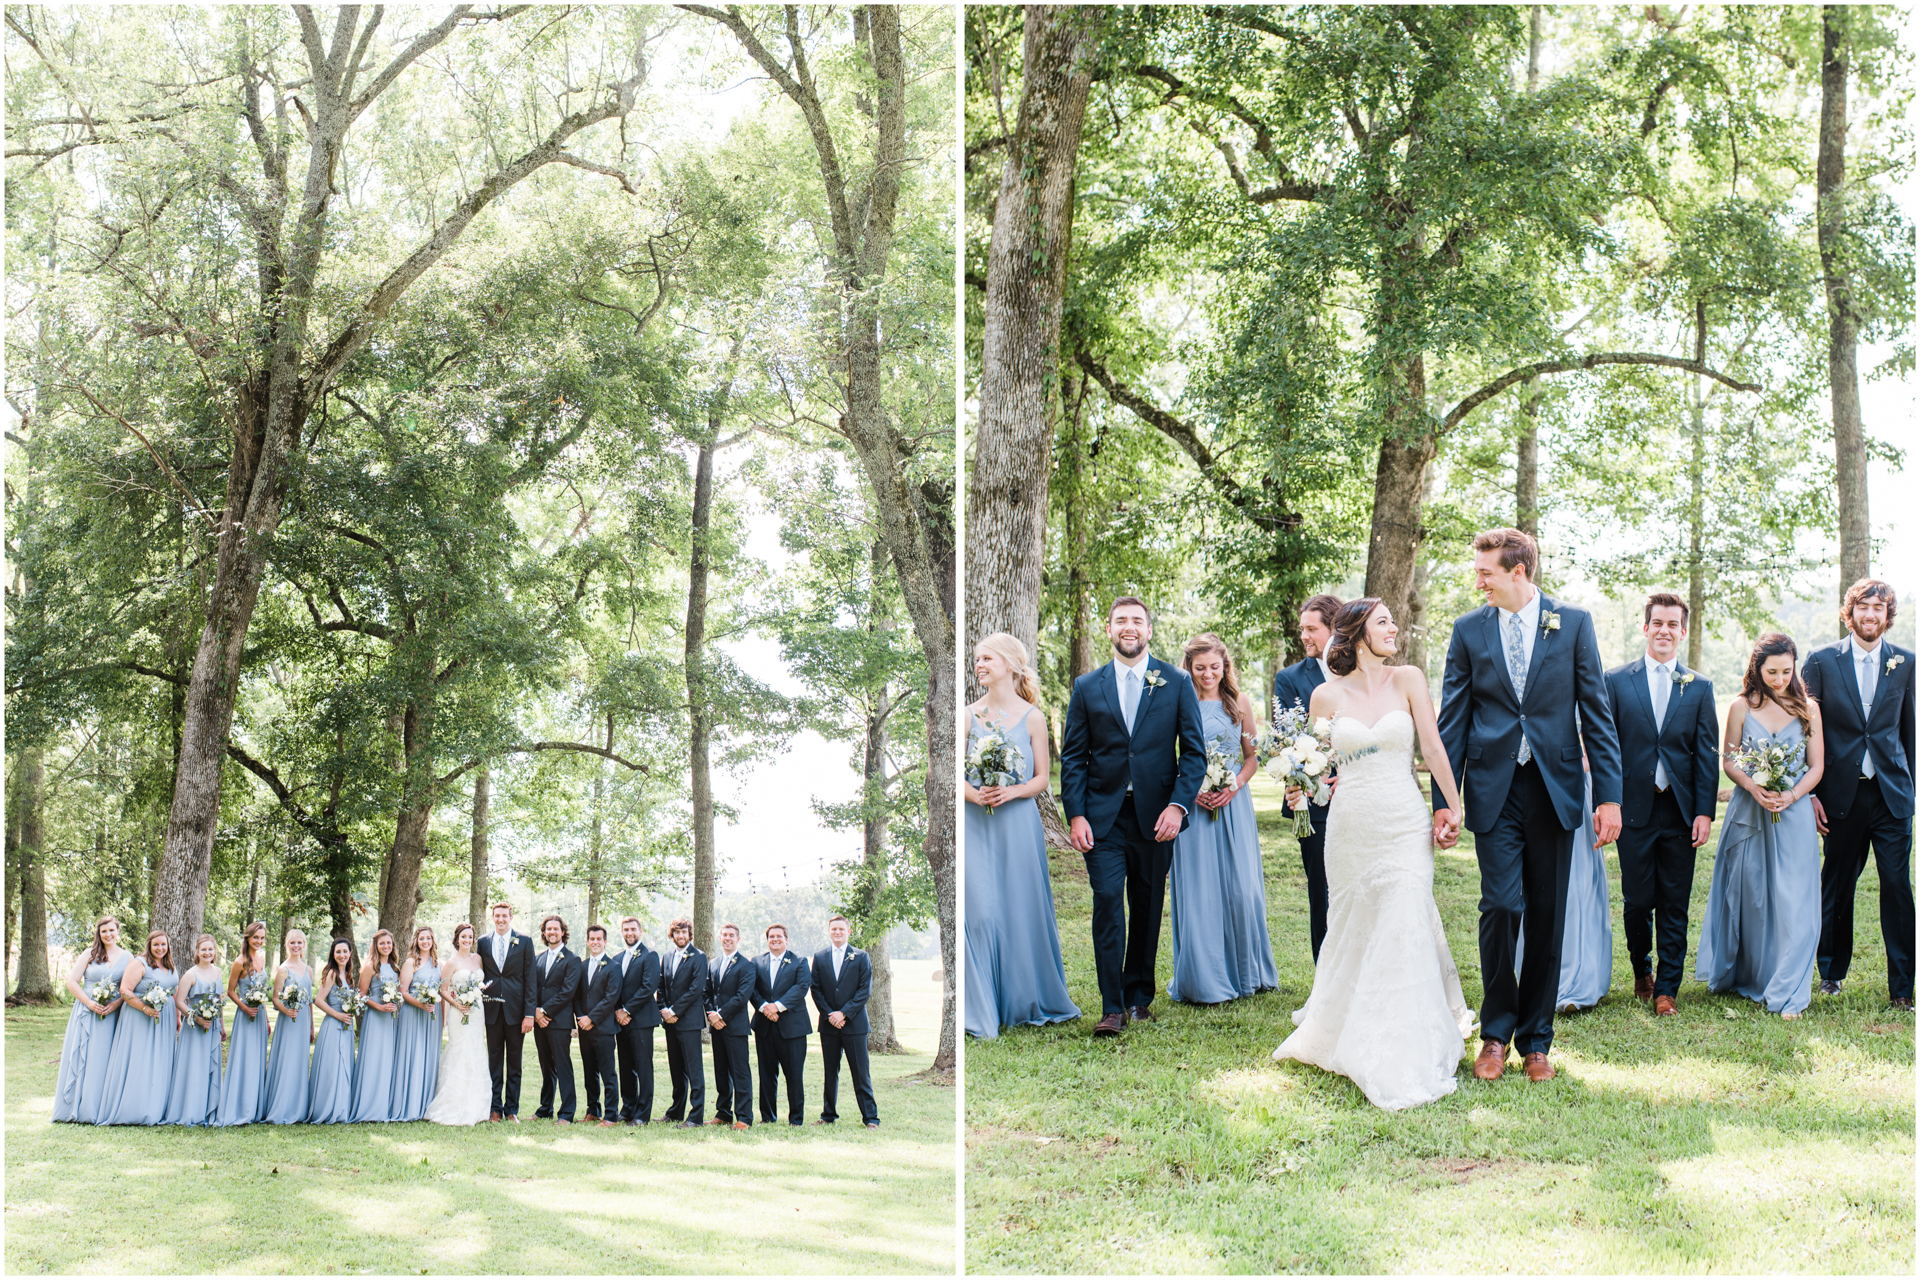 Slate Blue bridal party - navy groomsmen - outdoor Alabama wedding